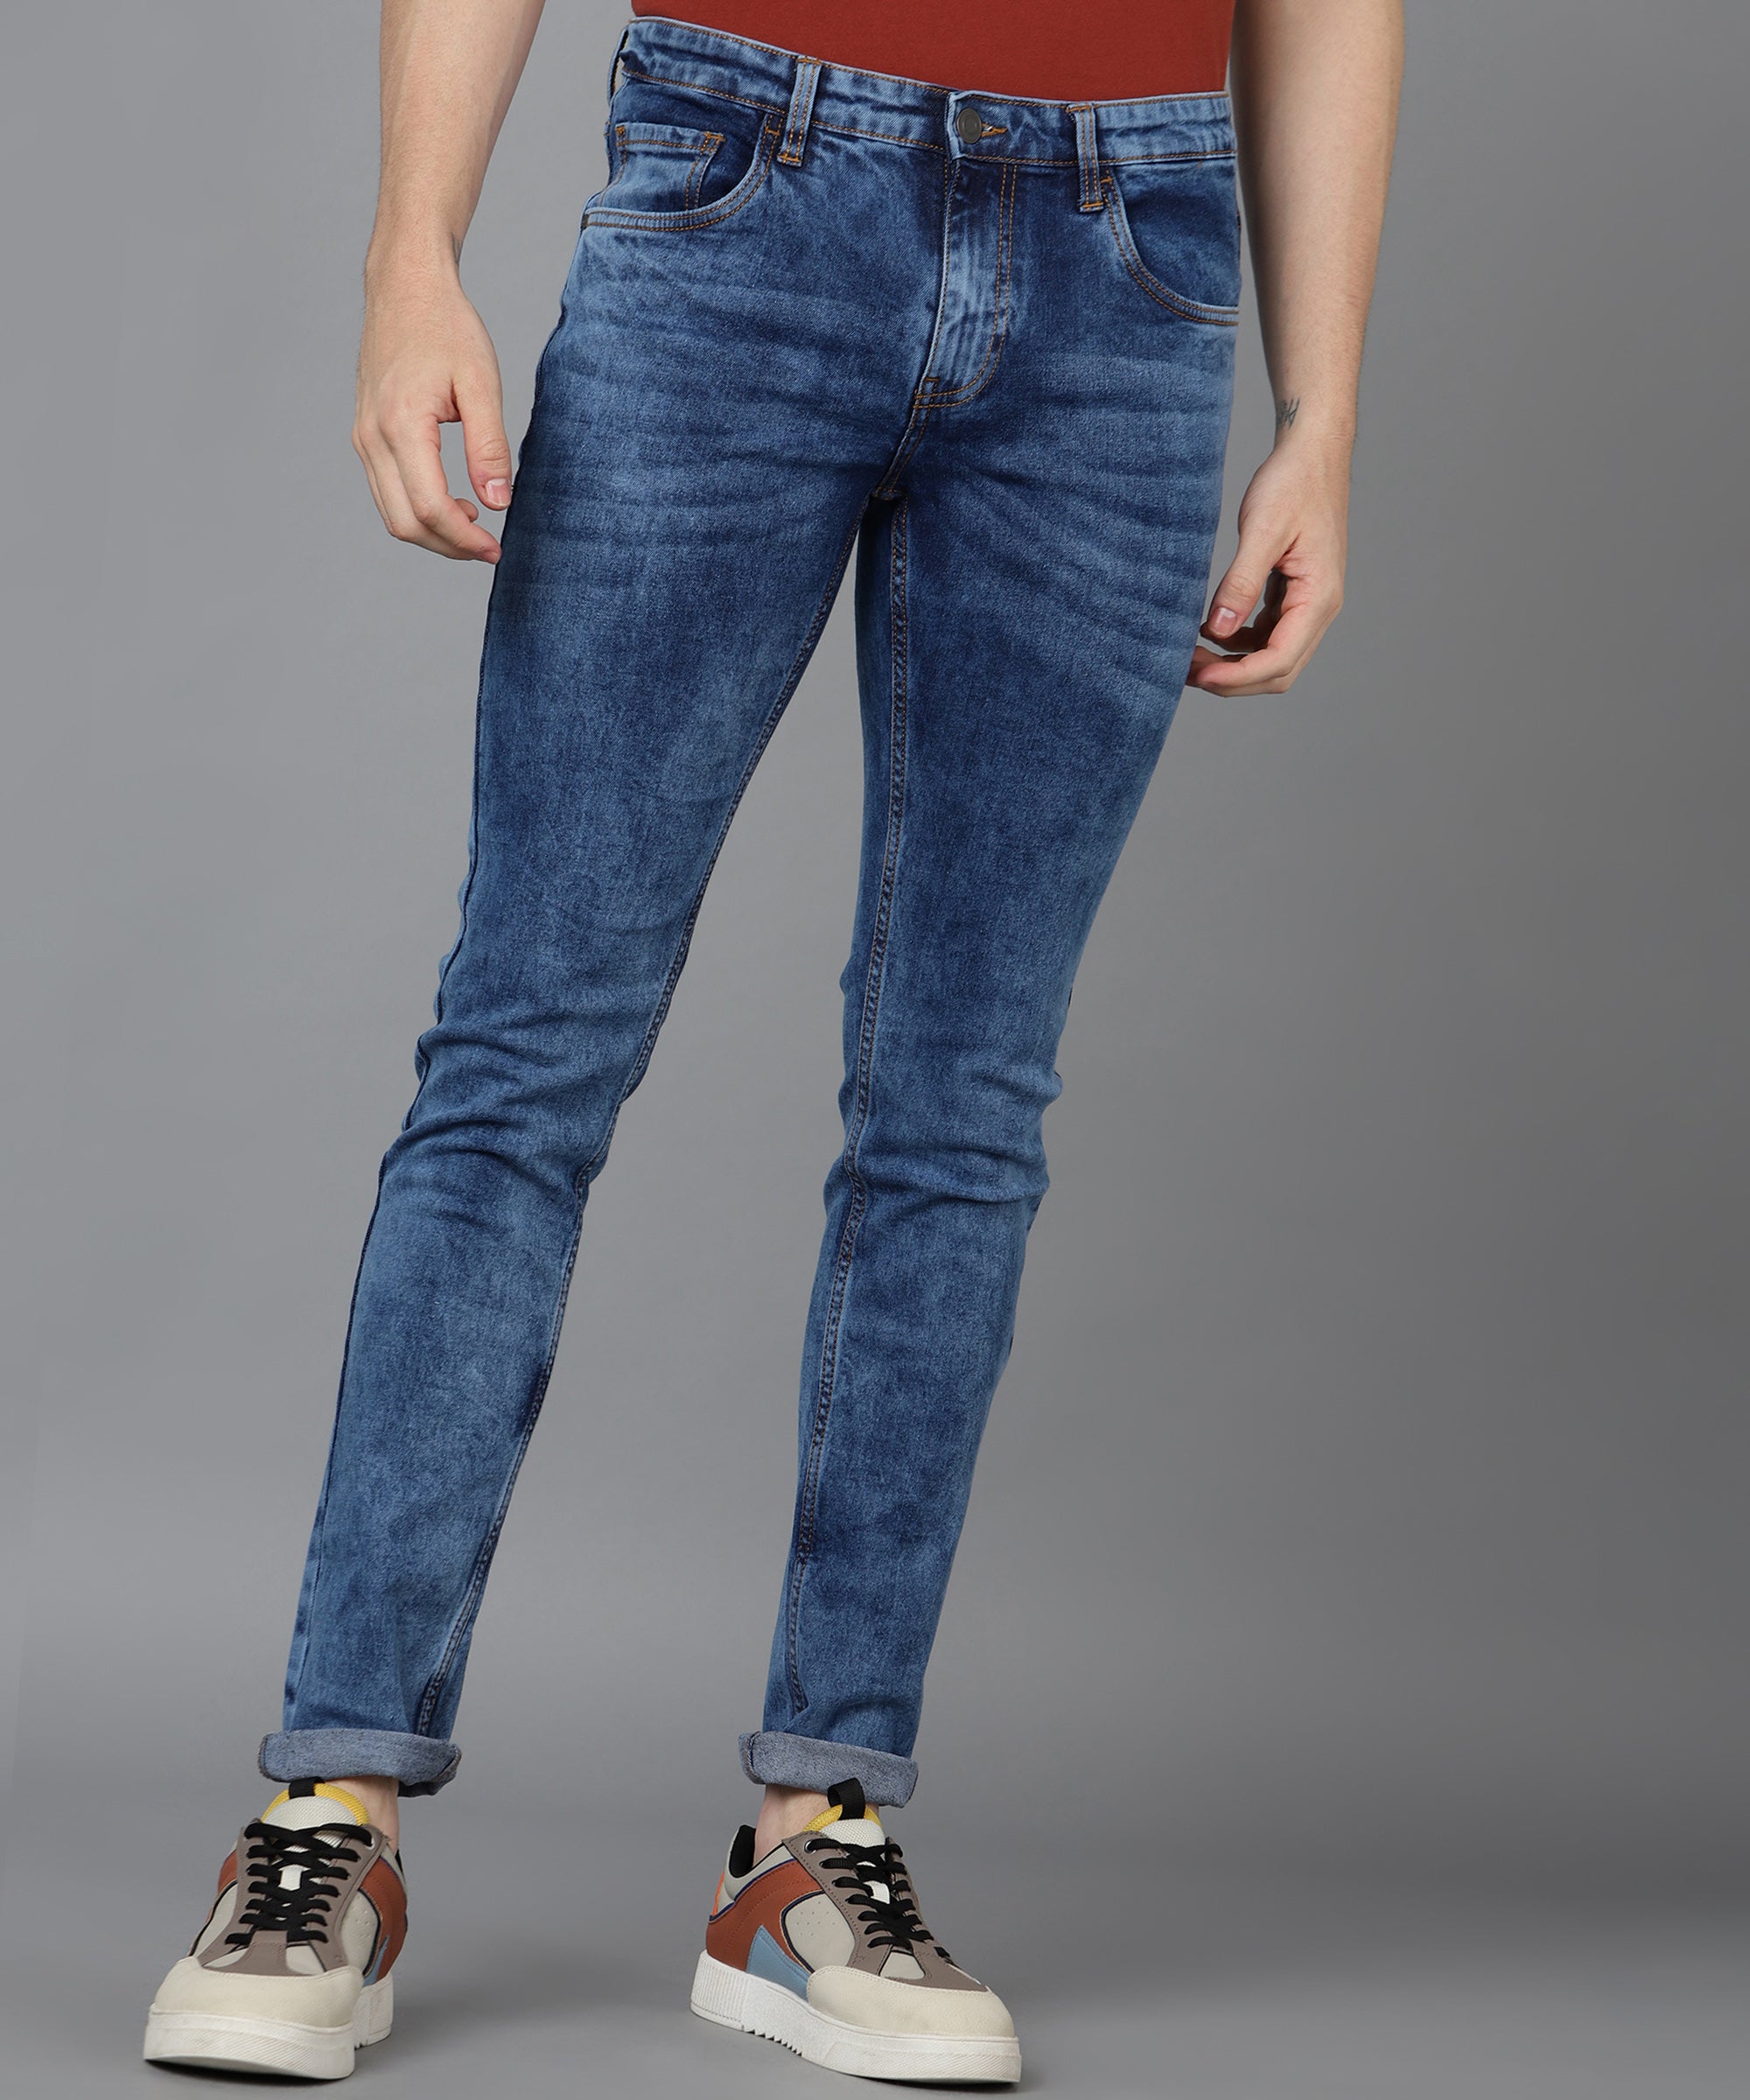 Men's Blue Slim Fit Washed Jeans Stretchable